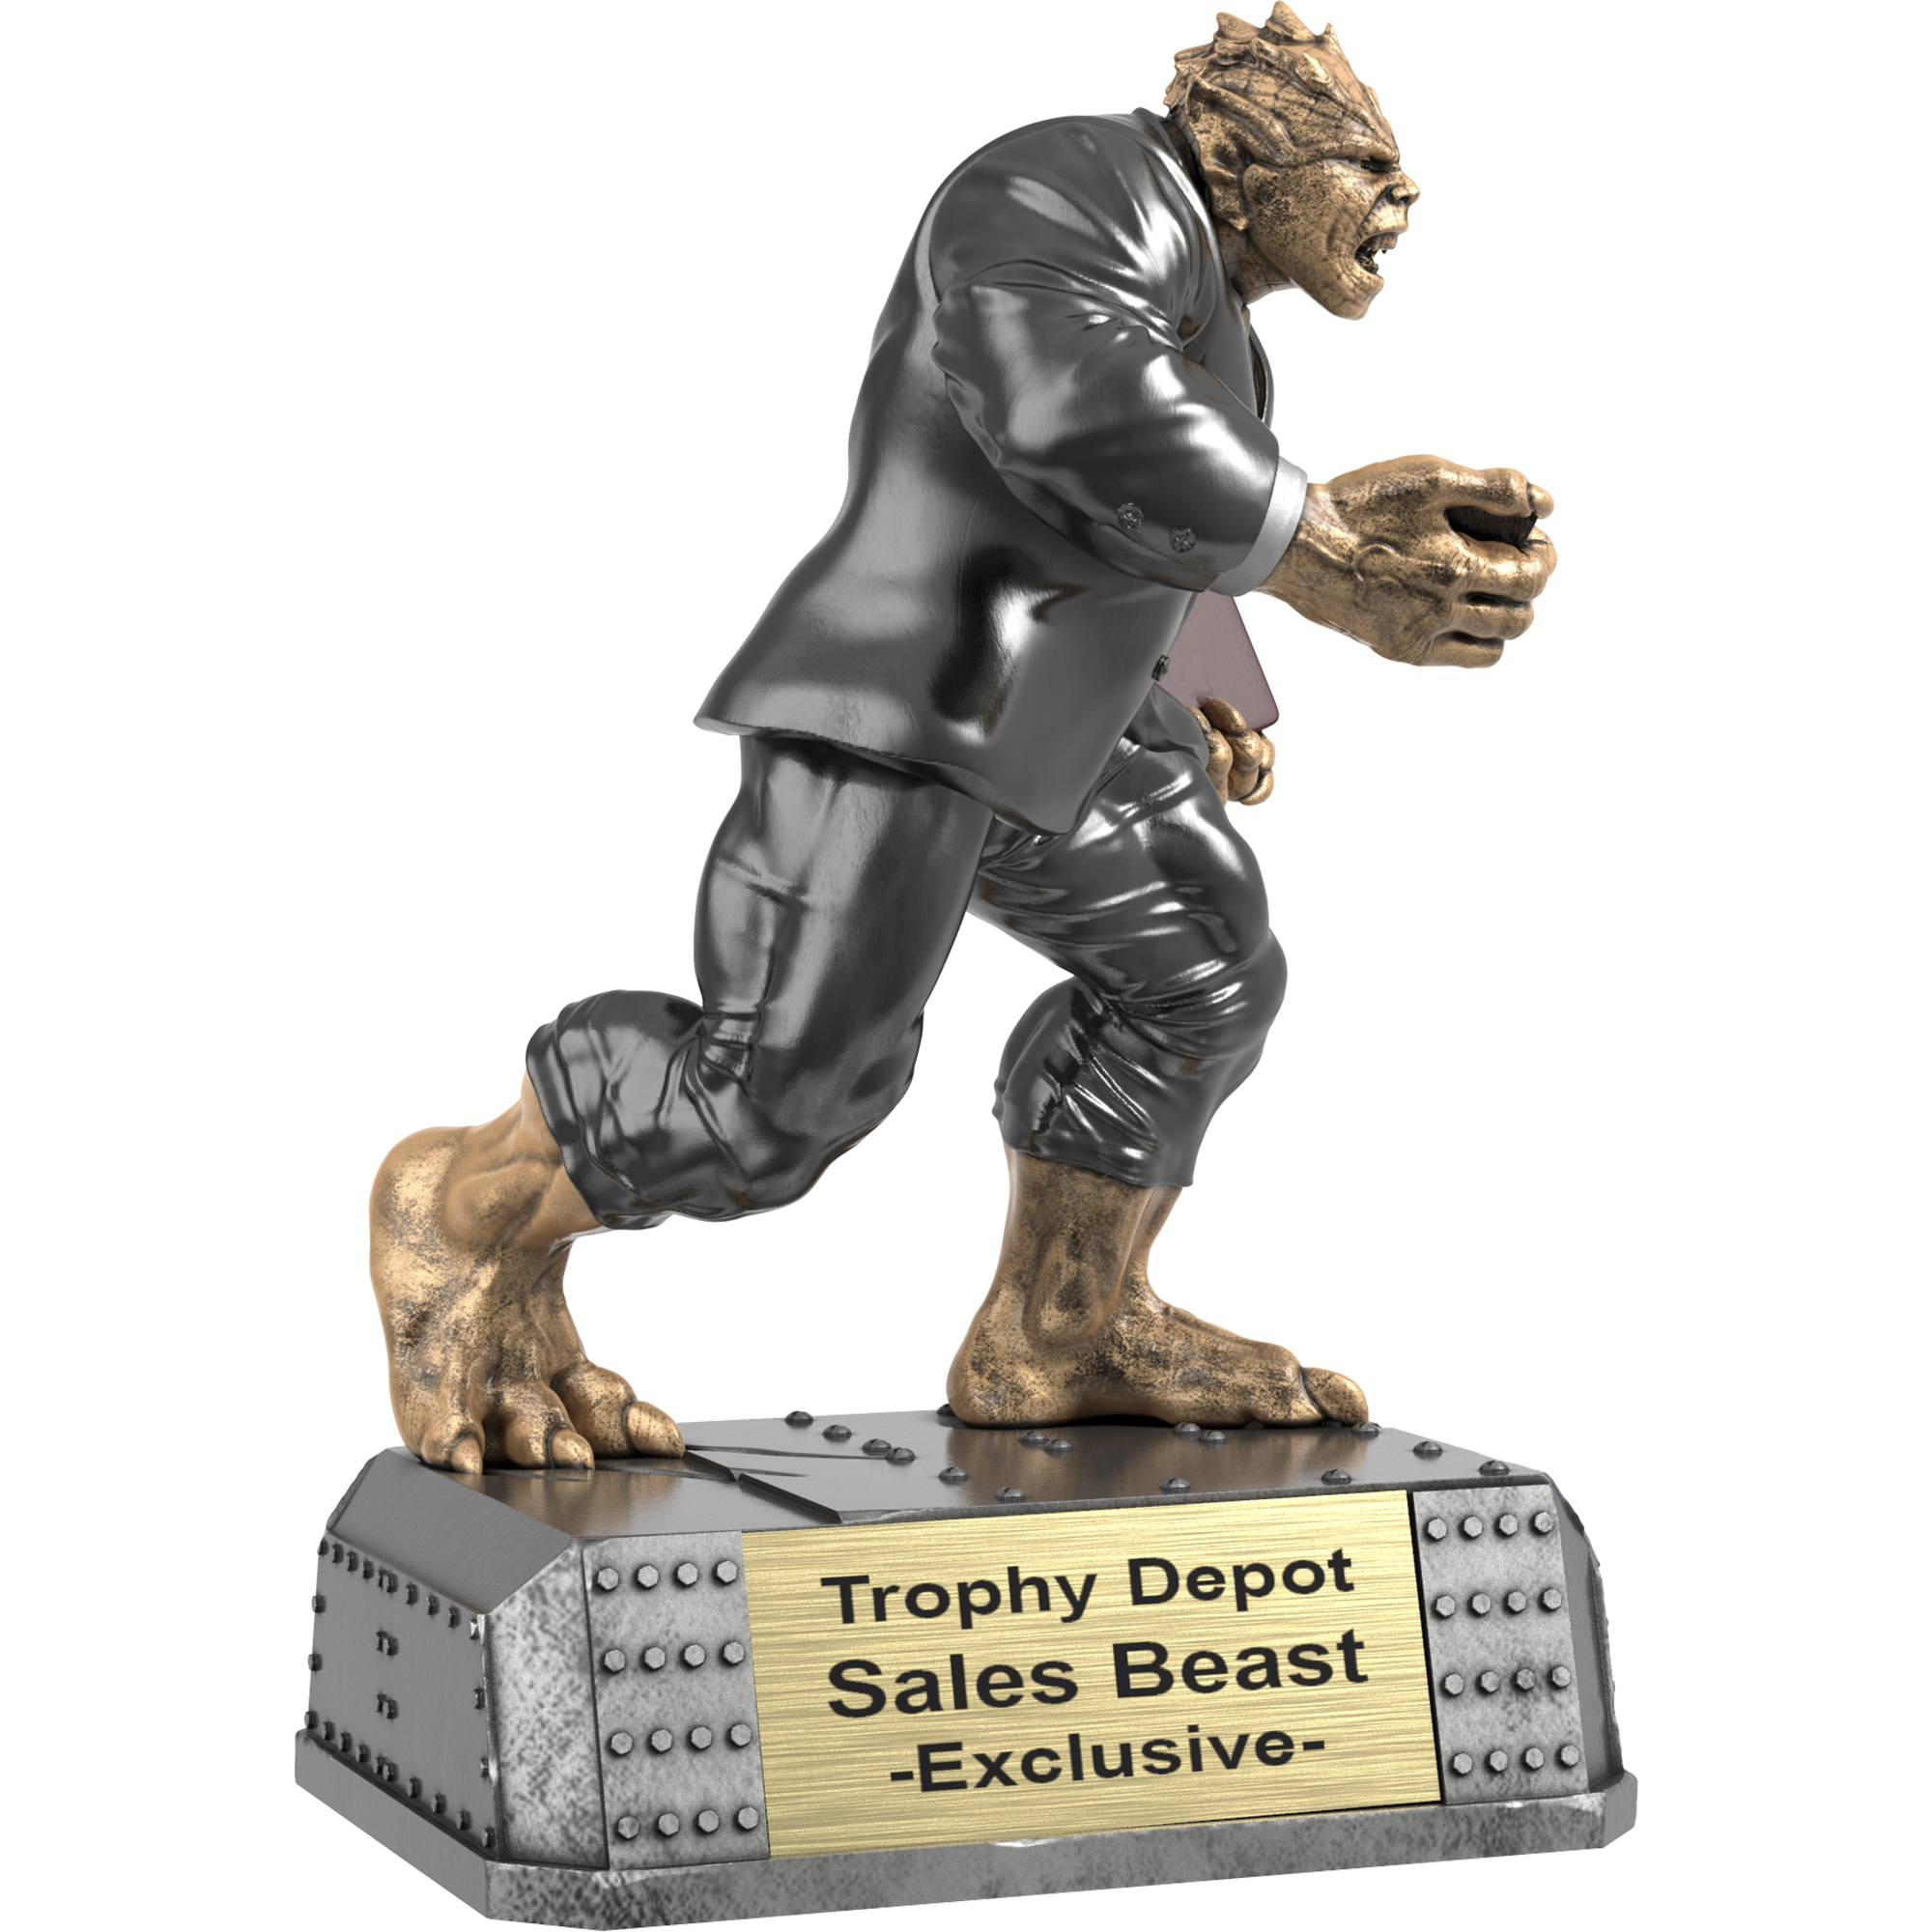 Sales Beast, Monster Sculpture Trophy - 6.75 inch